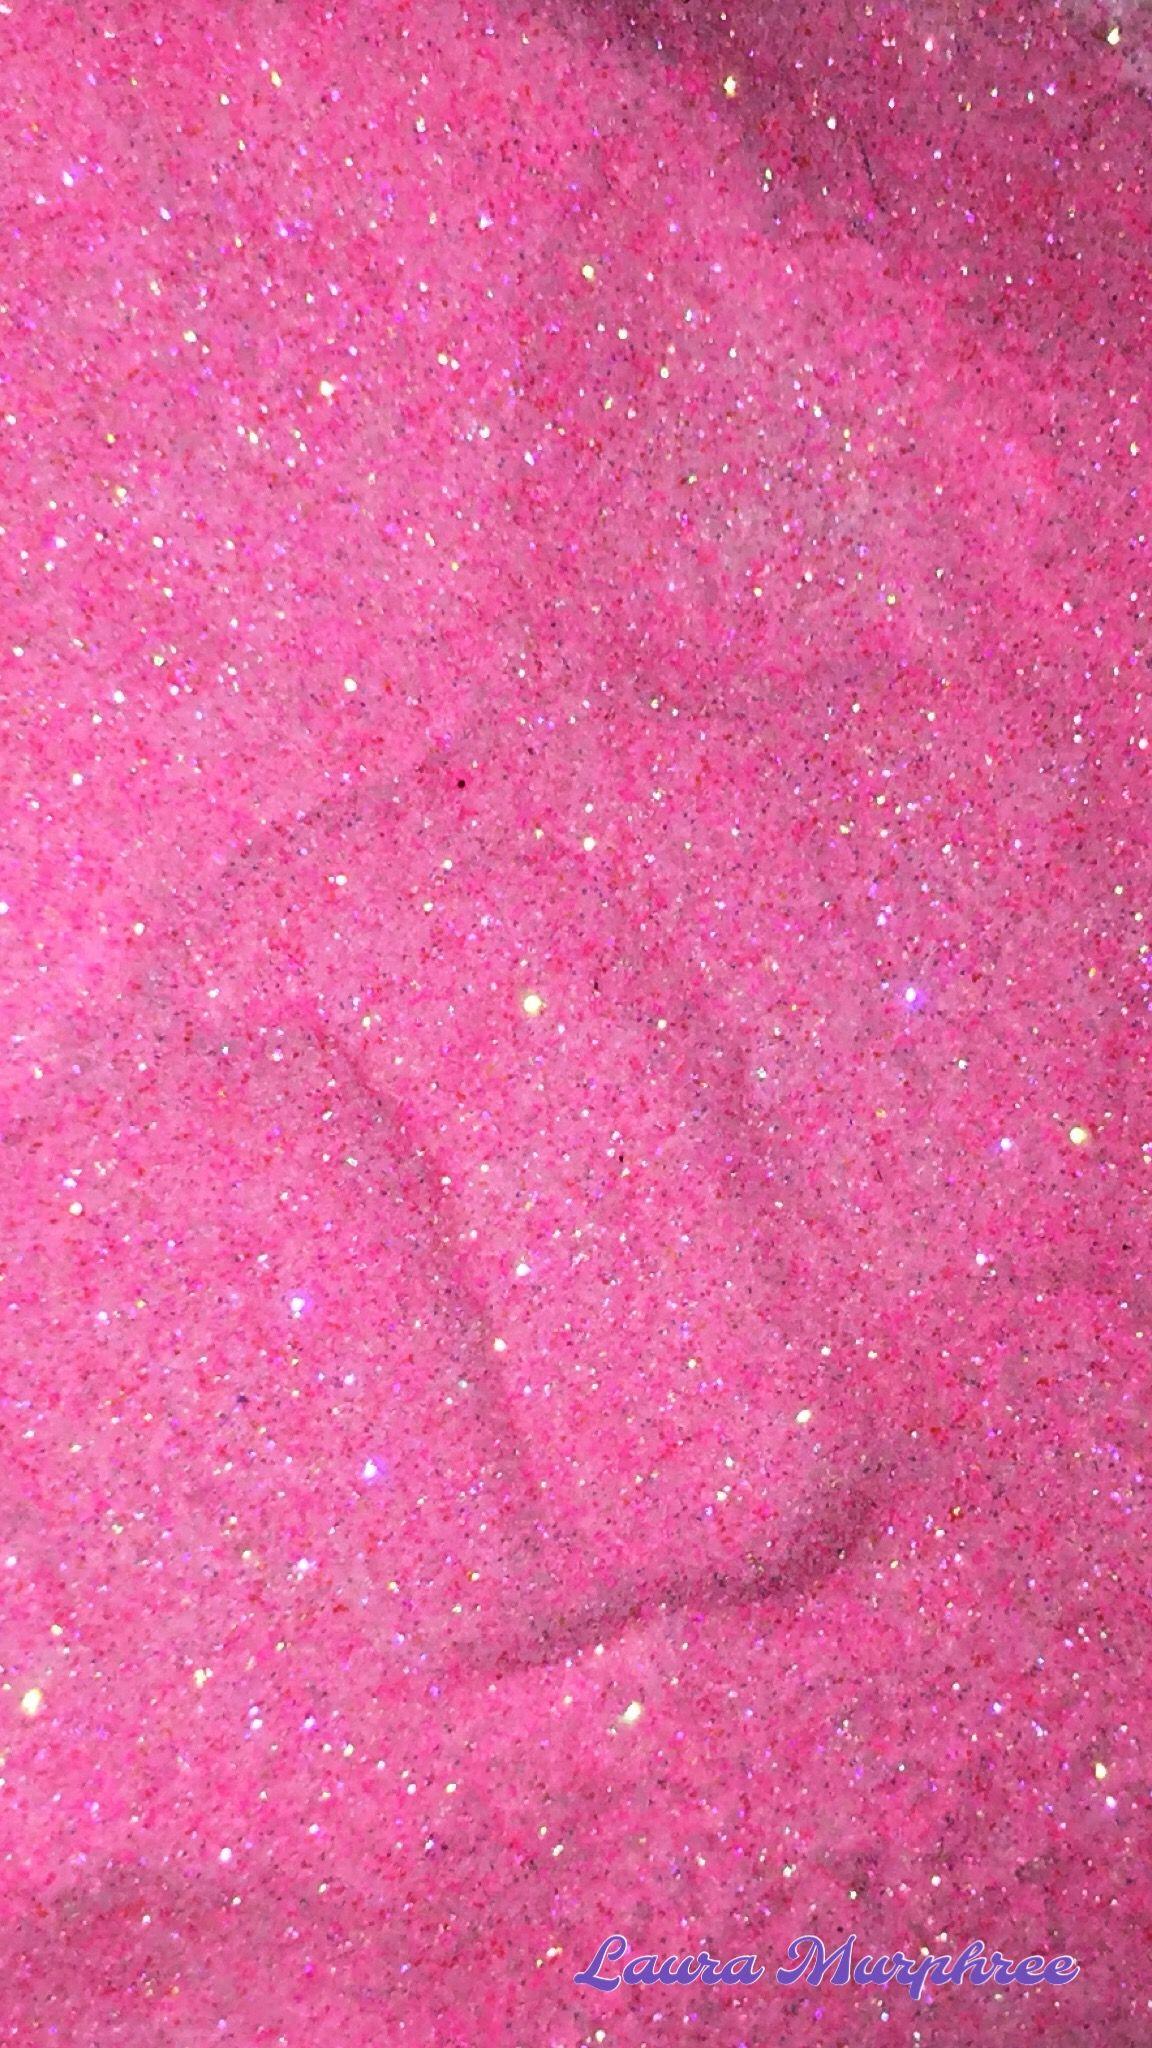 Glitter wallpaper pink Sparkle background sparkling glittery